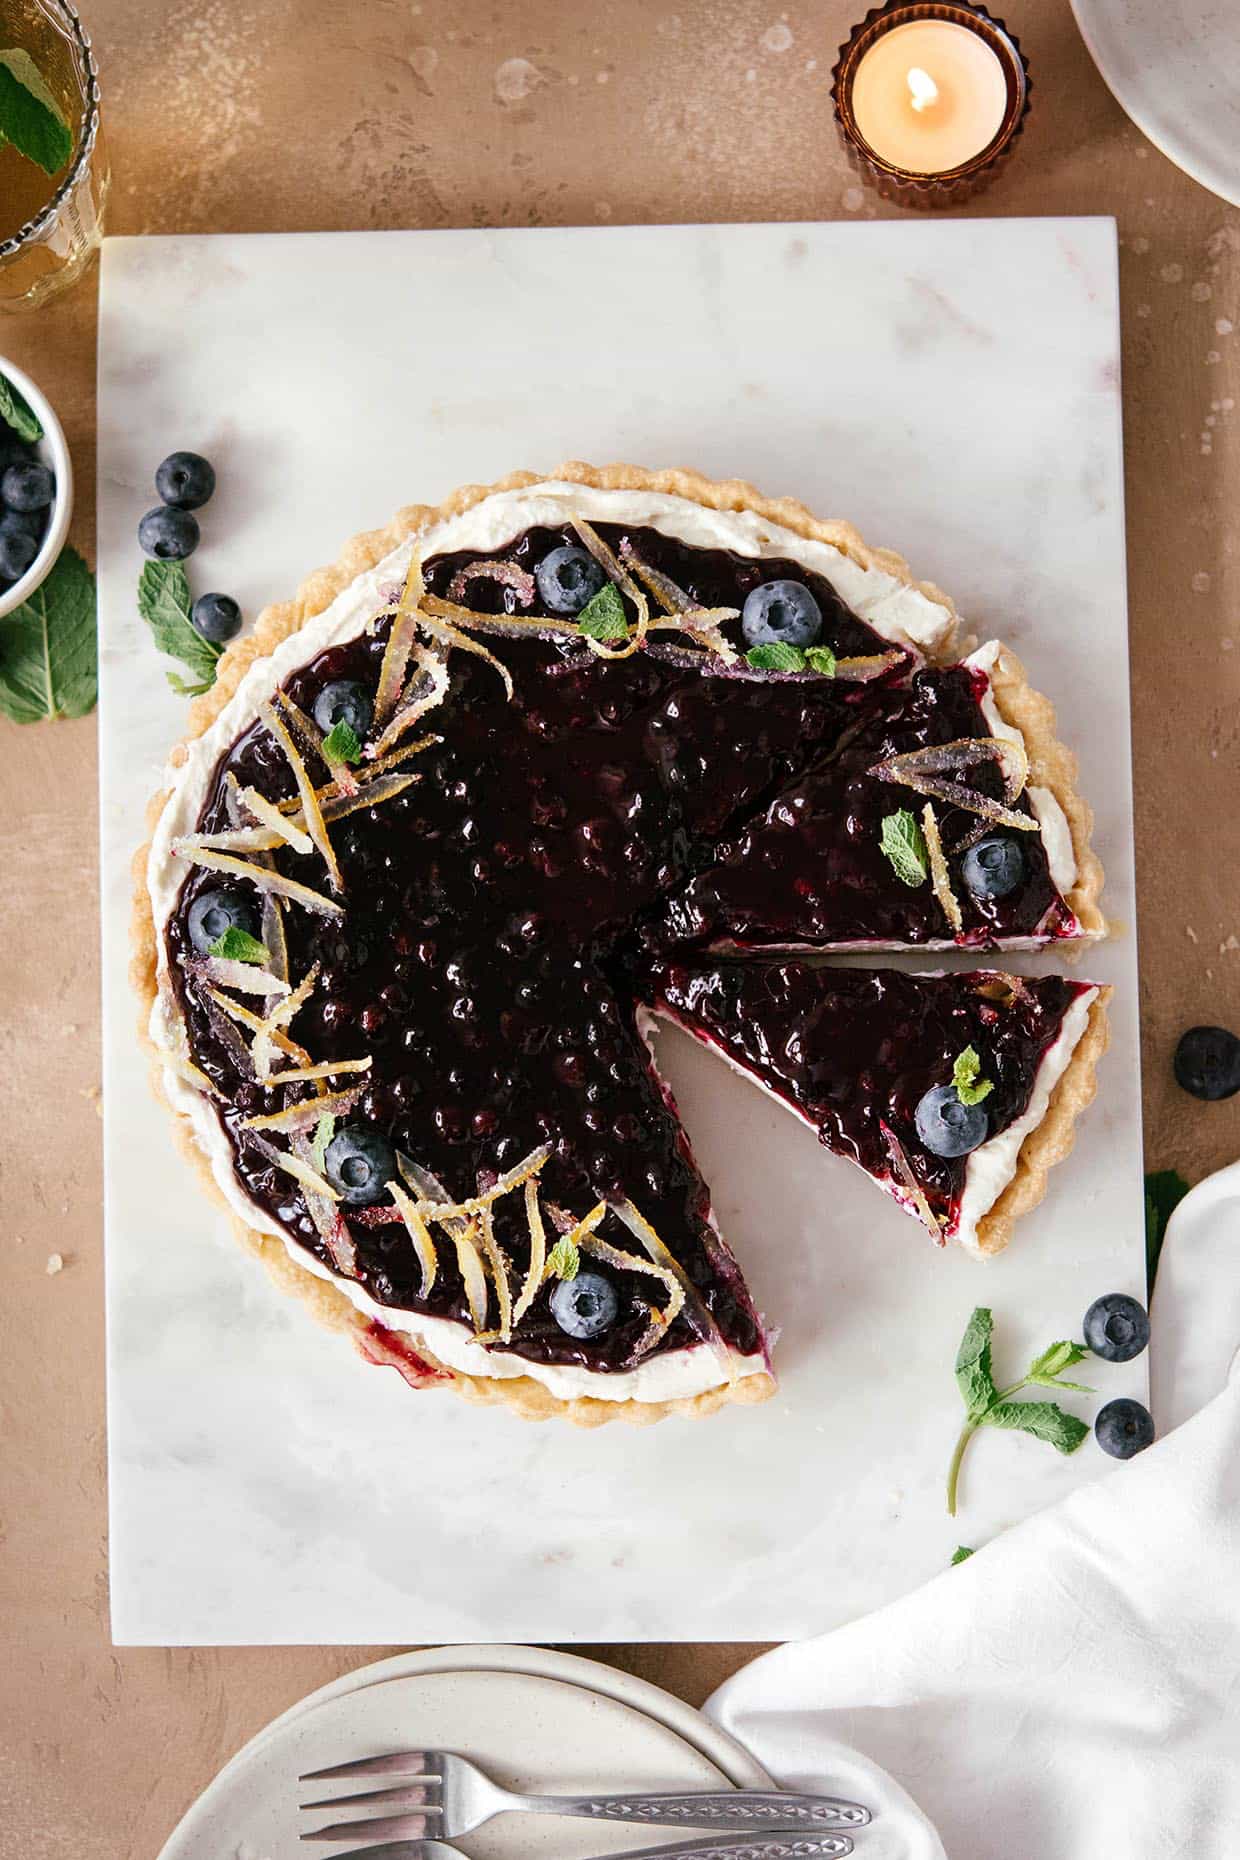 blueberry mascarpone cream pie (tart)